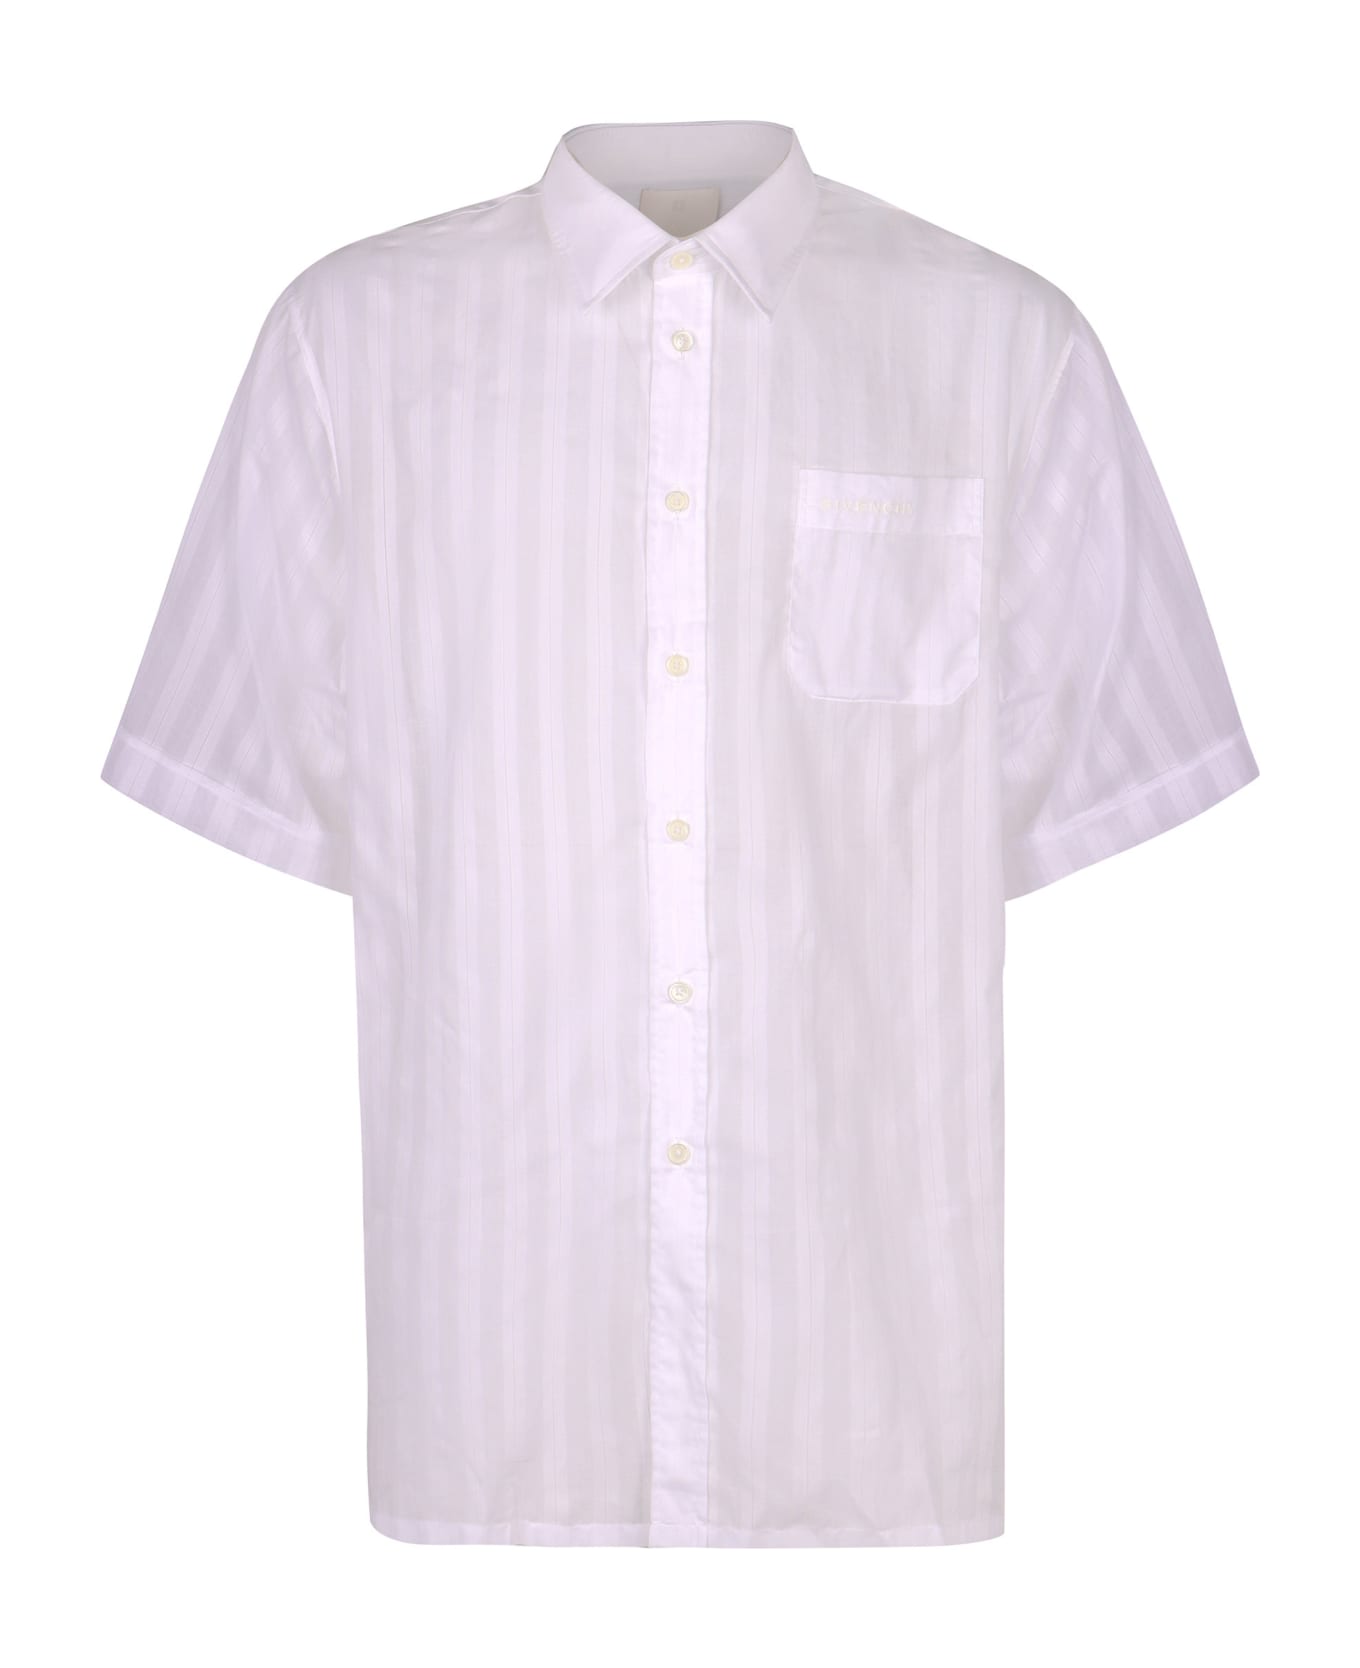 Givenchy Short Sleeve Cotton Shirt - White シャツ